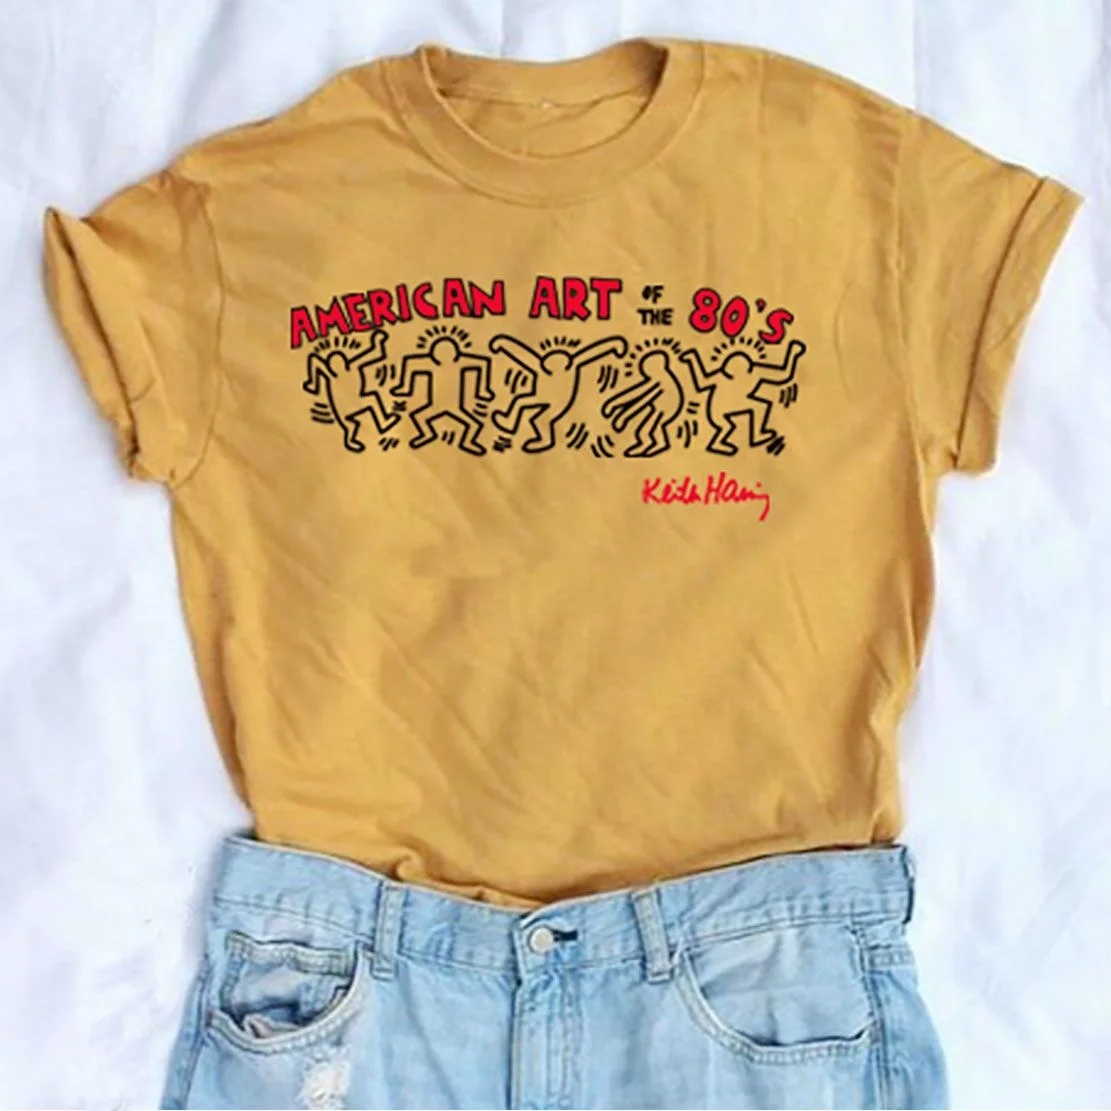 Starqueen-JBH Unisex Vintage Moda Ameriški Umetnosti V 80. letih Ilustracije T-Shirt Grunge Estetske Pop Art Tee Lepe Ulice